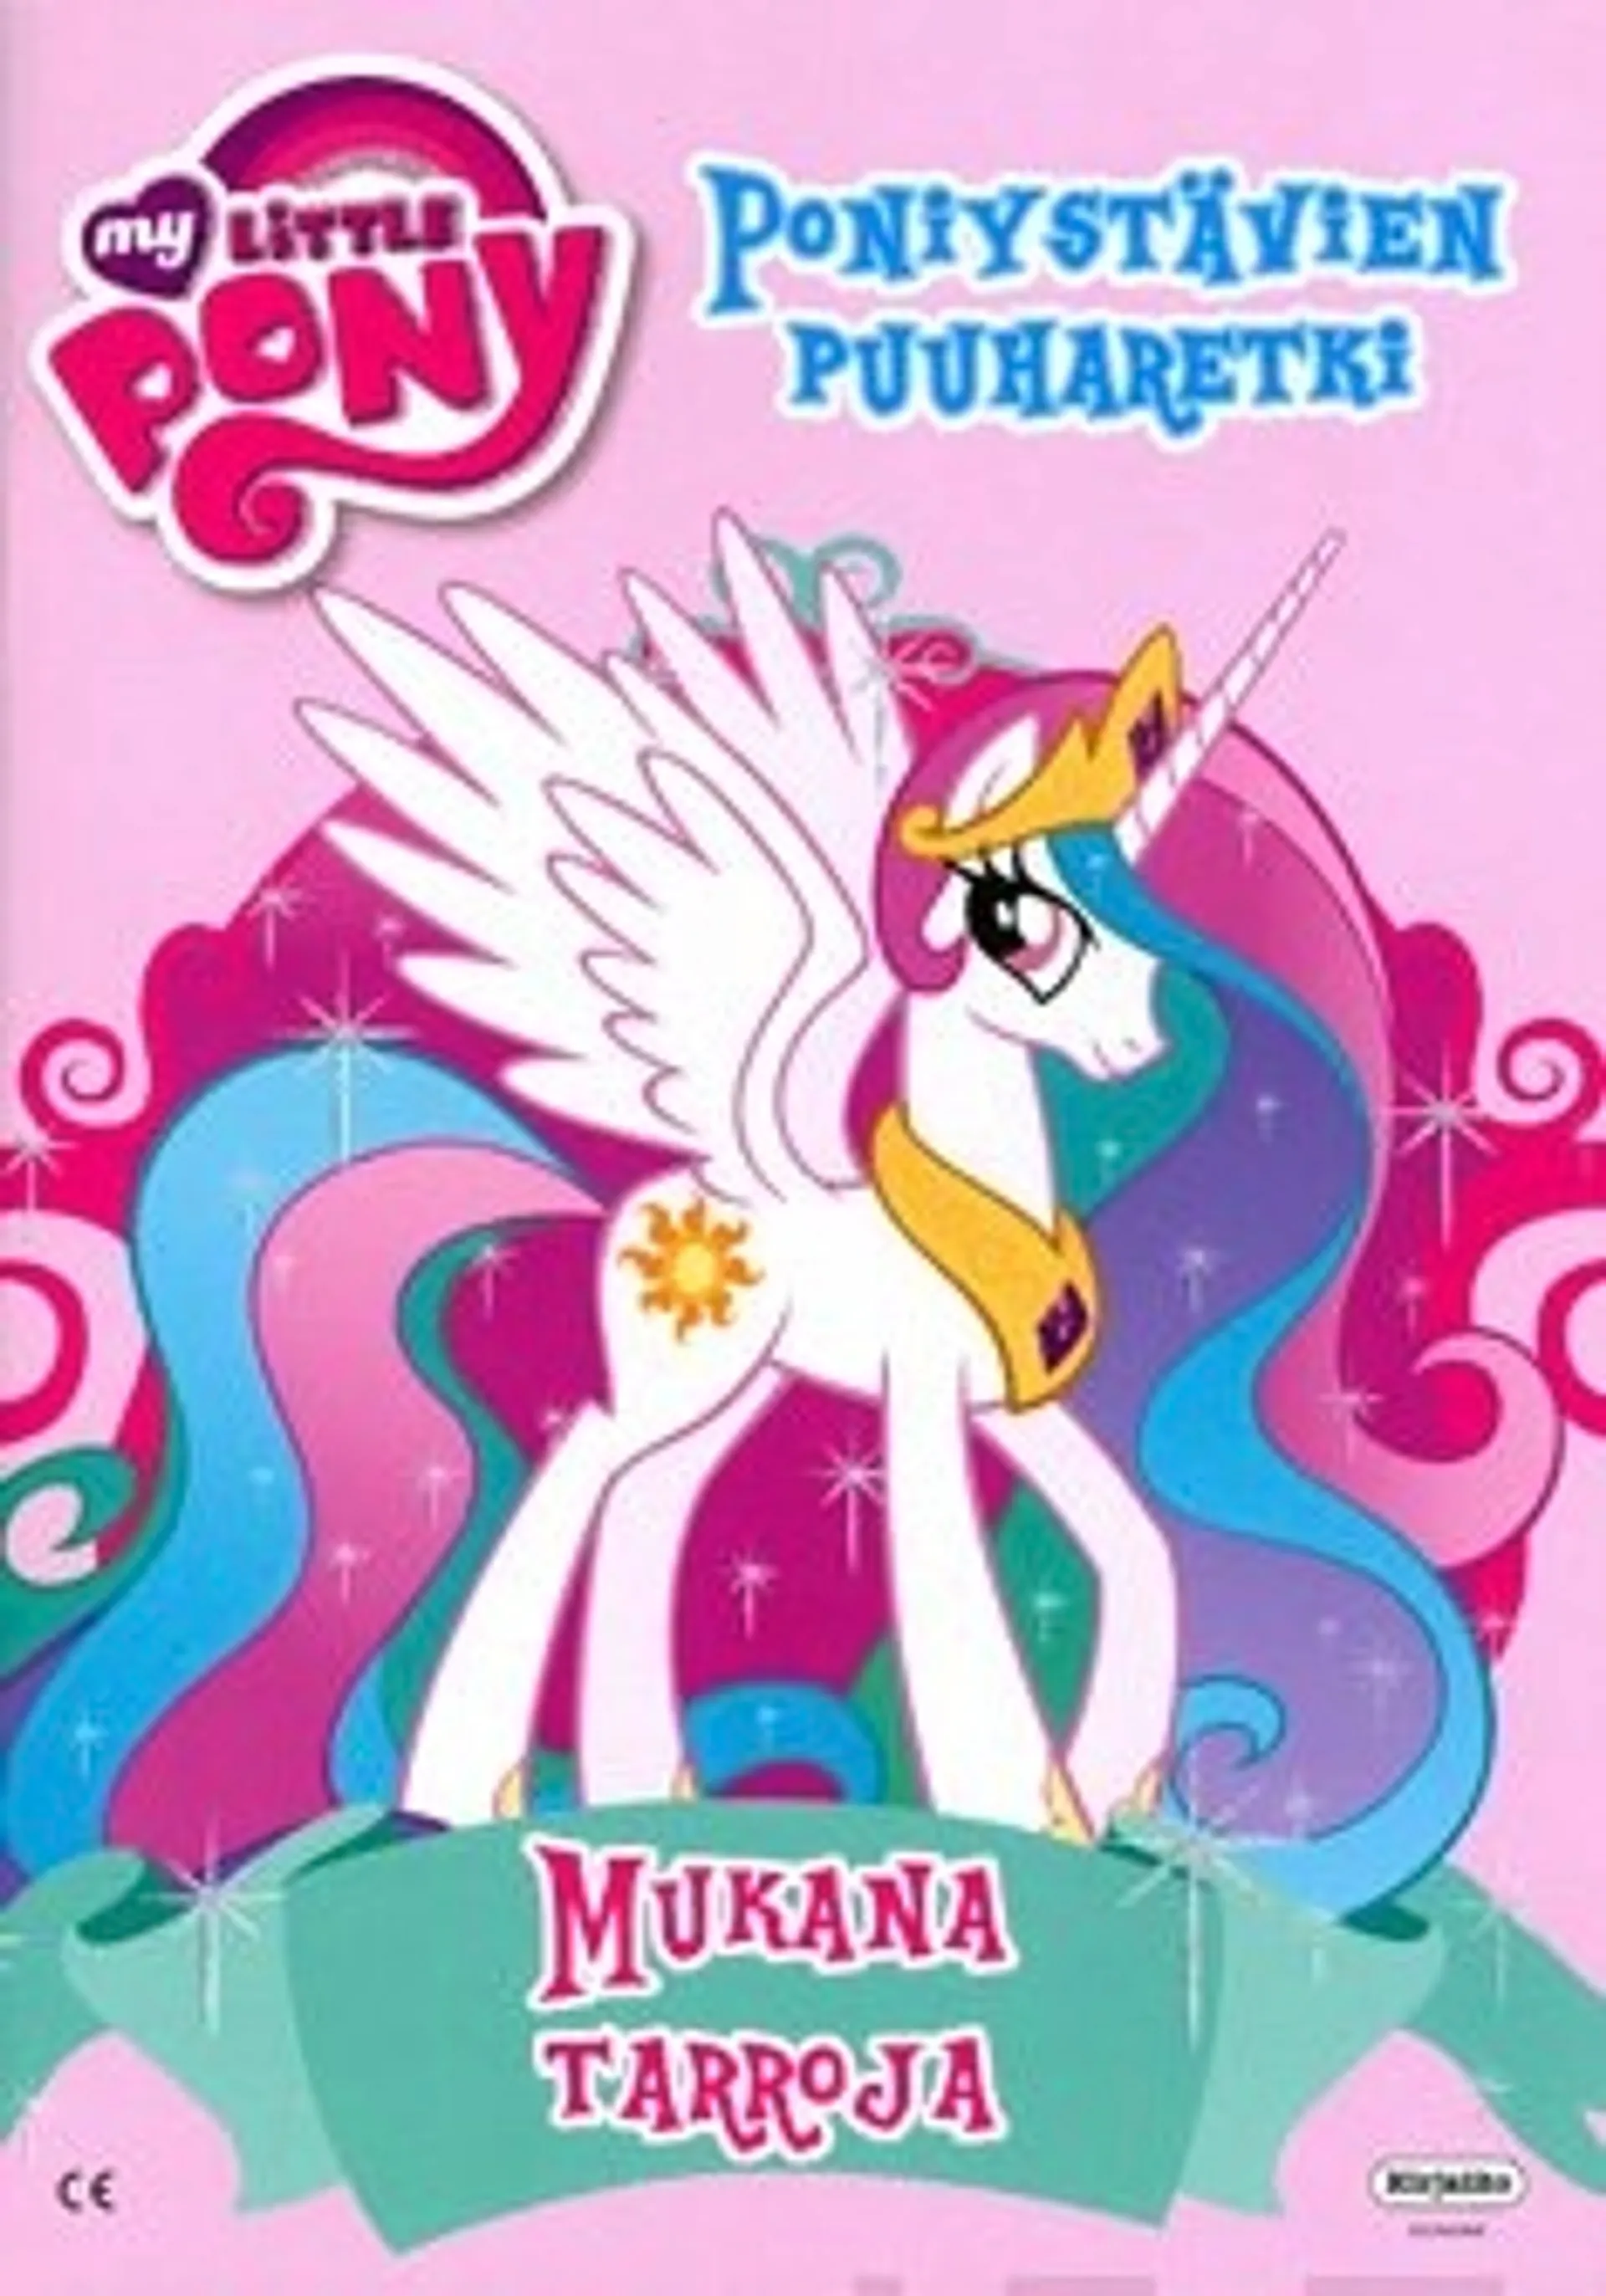 My Little Pony - Poniystävien puuharetki